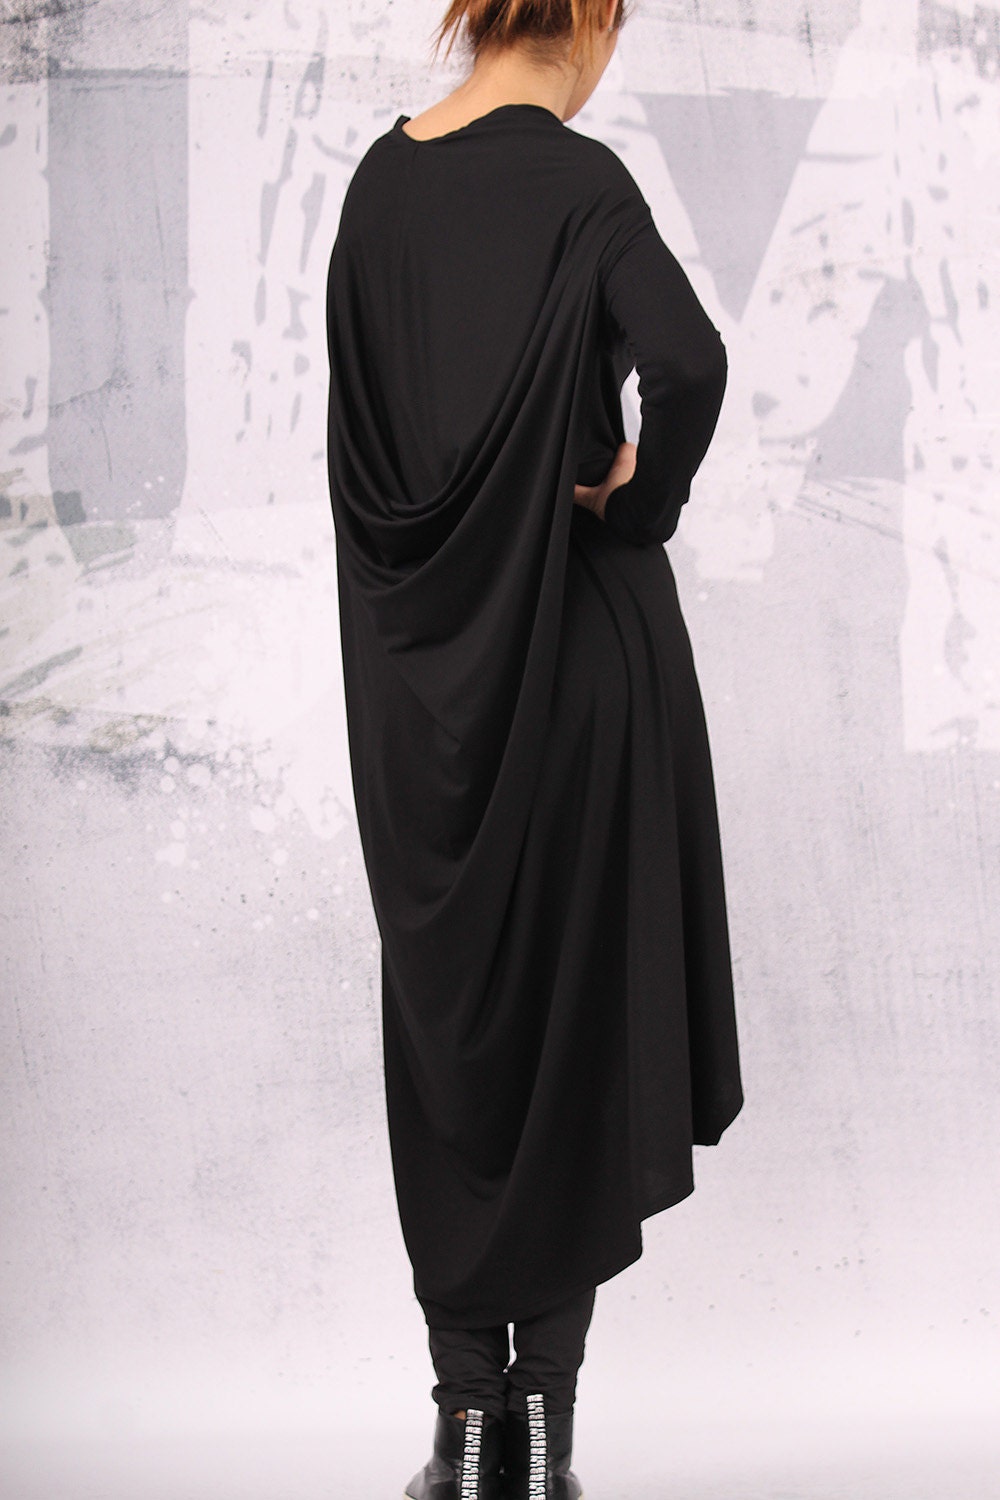 Black extravagant asymmetrical loose tunic dress plus size | Etsy